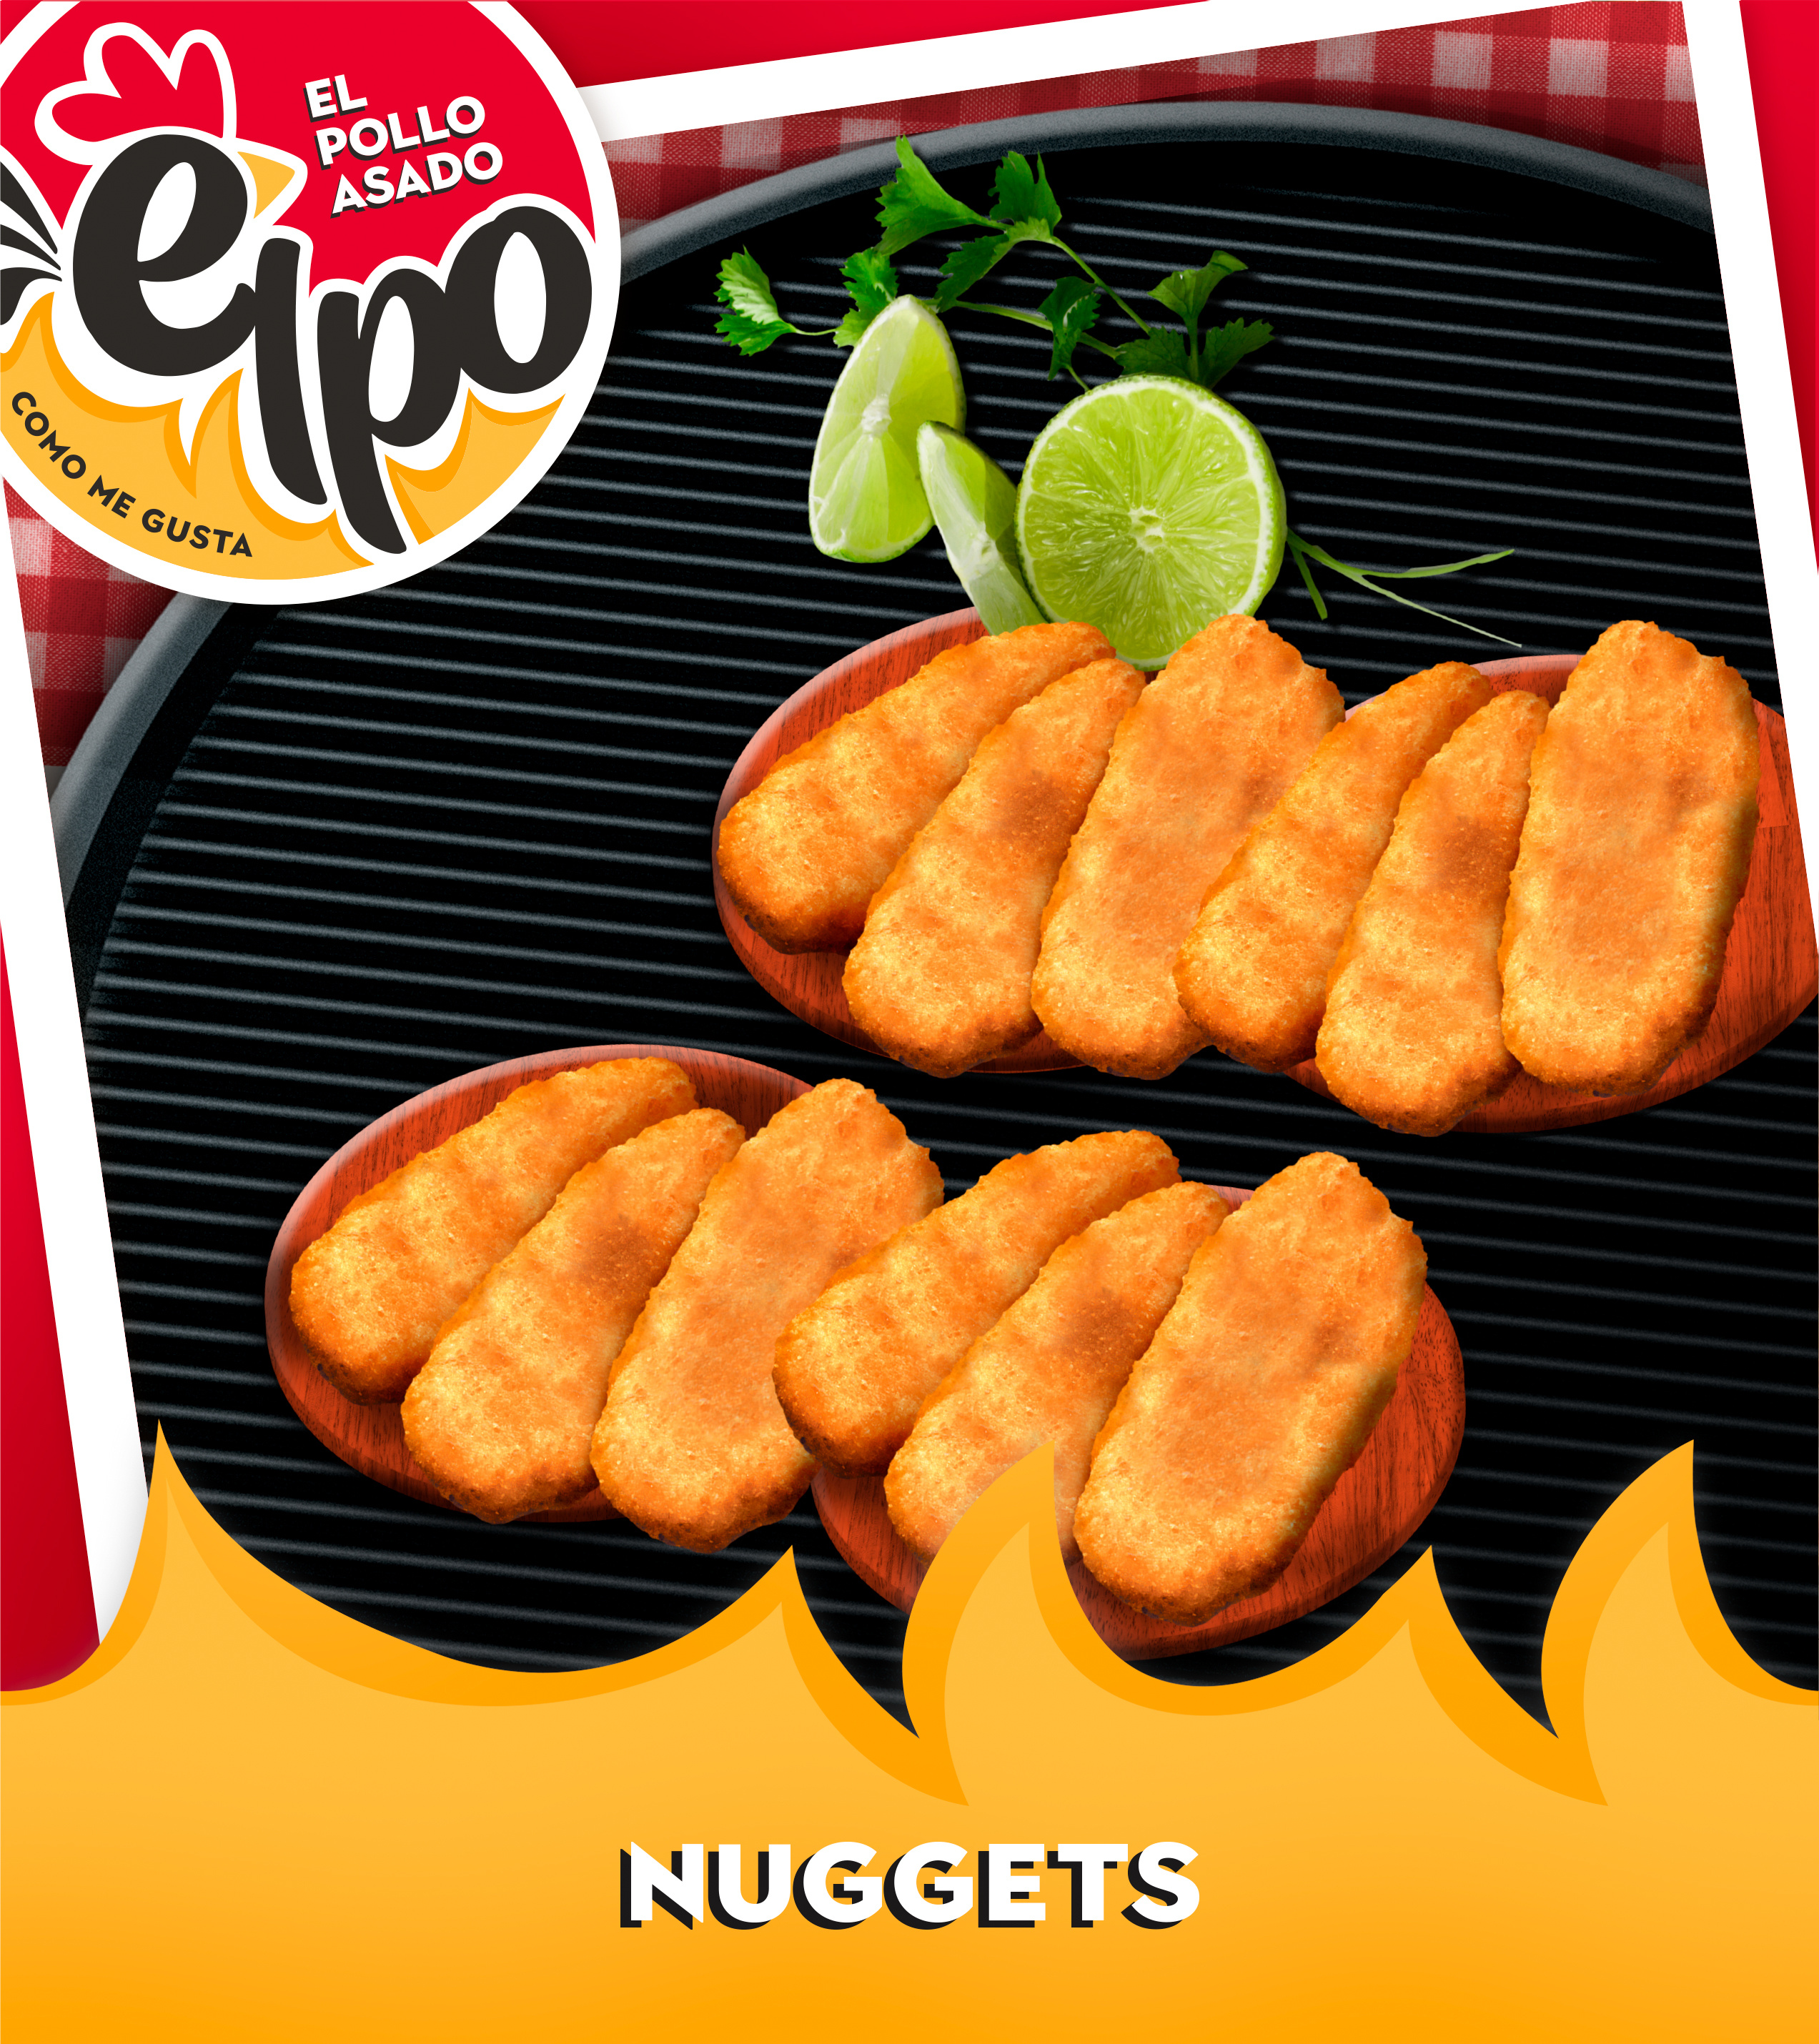 Elpo Nuggets